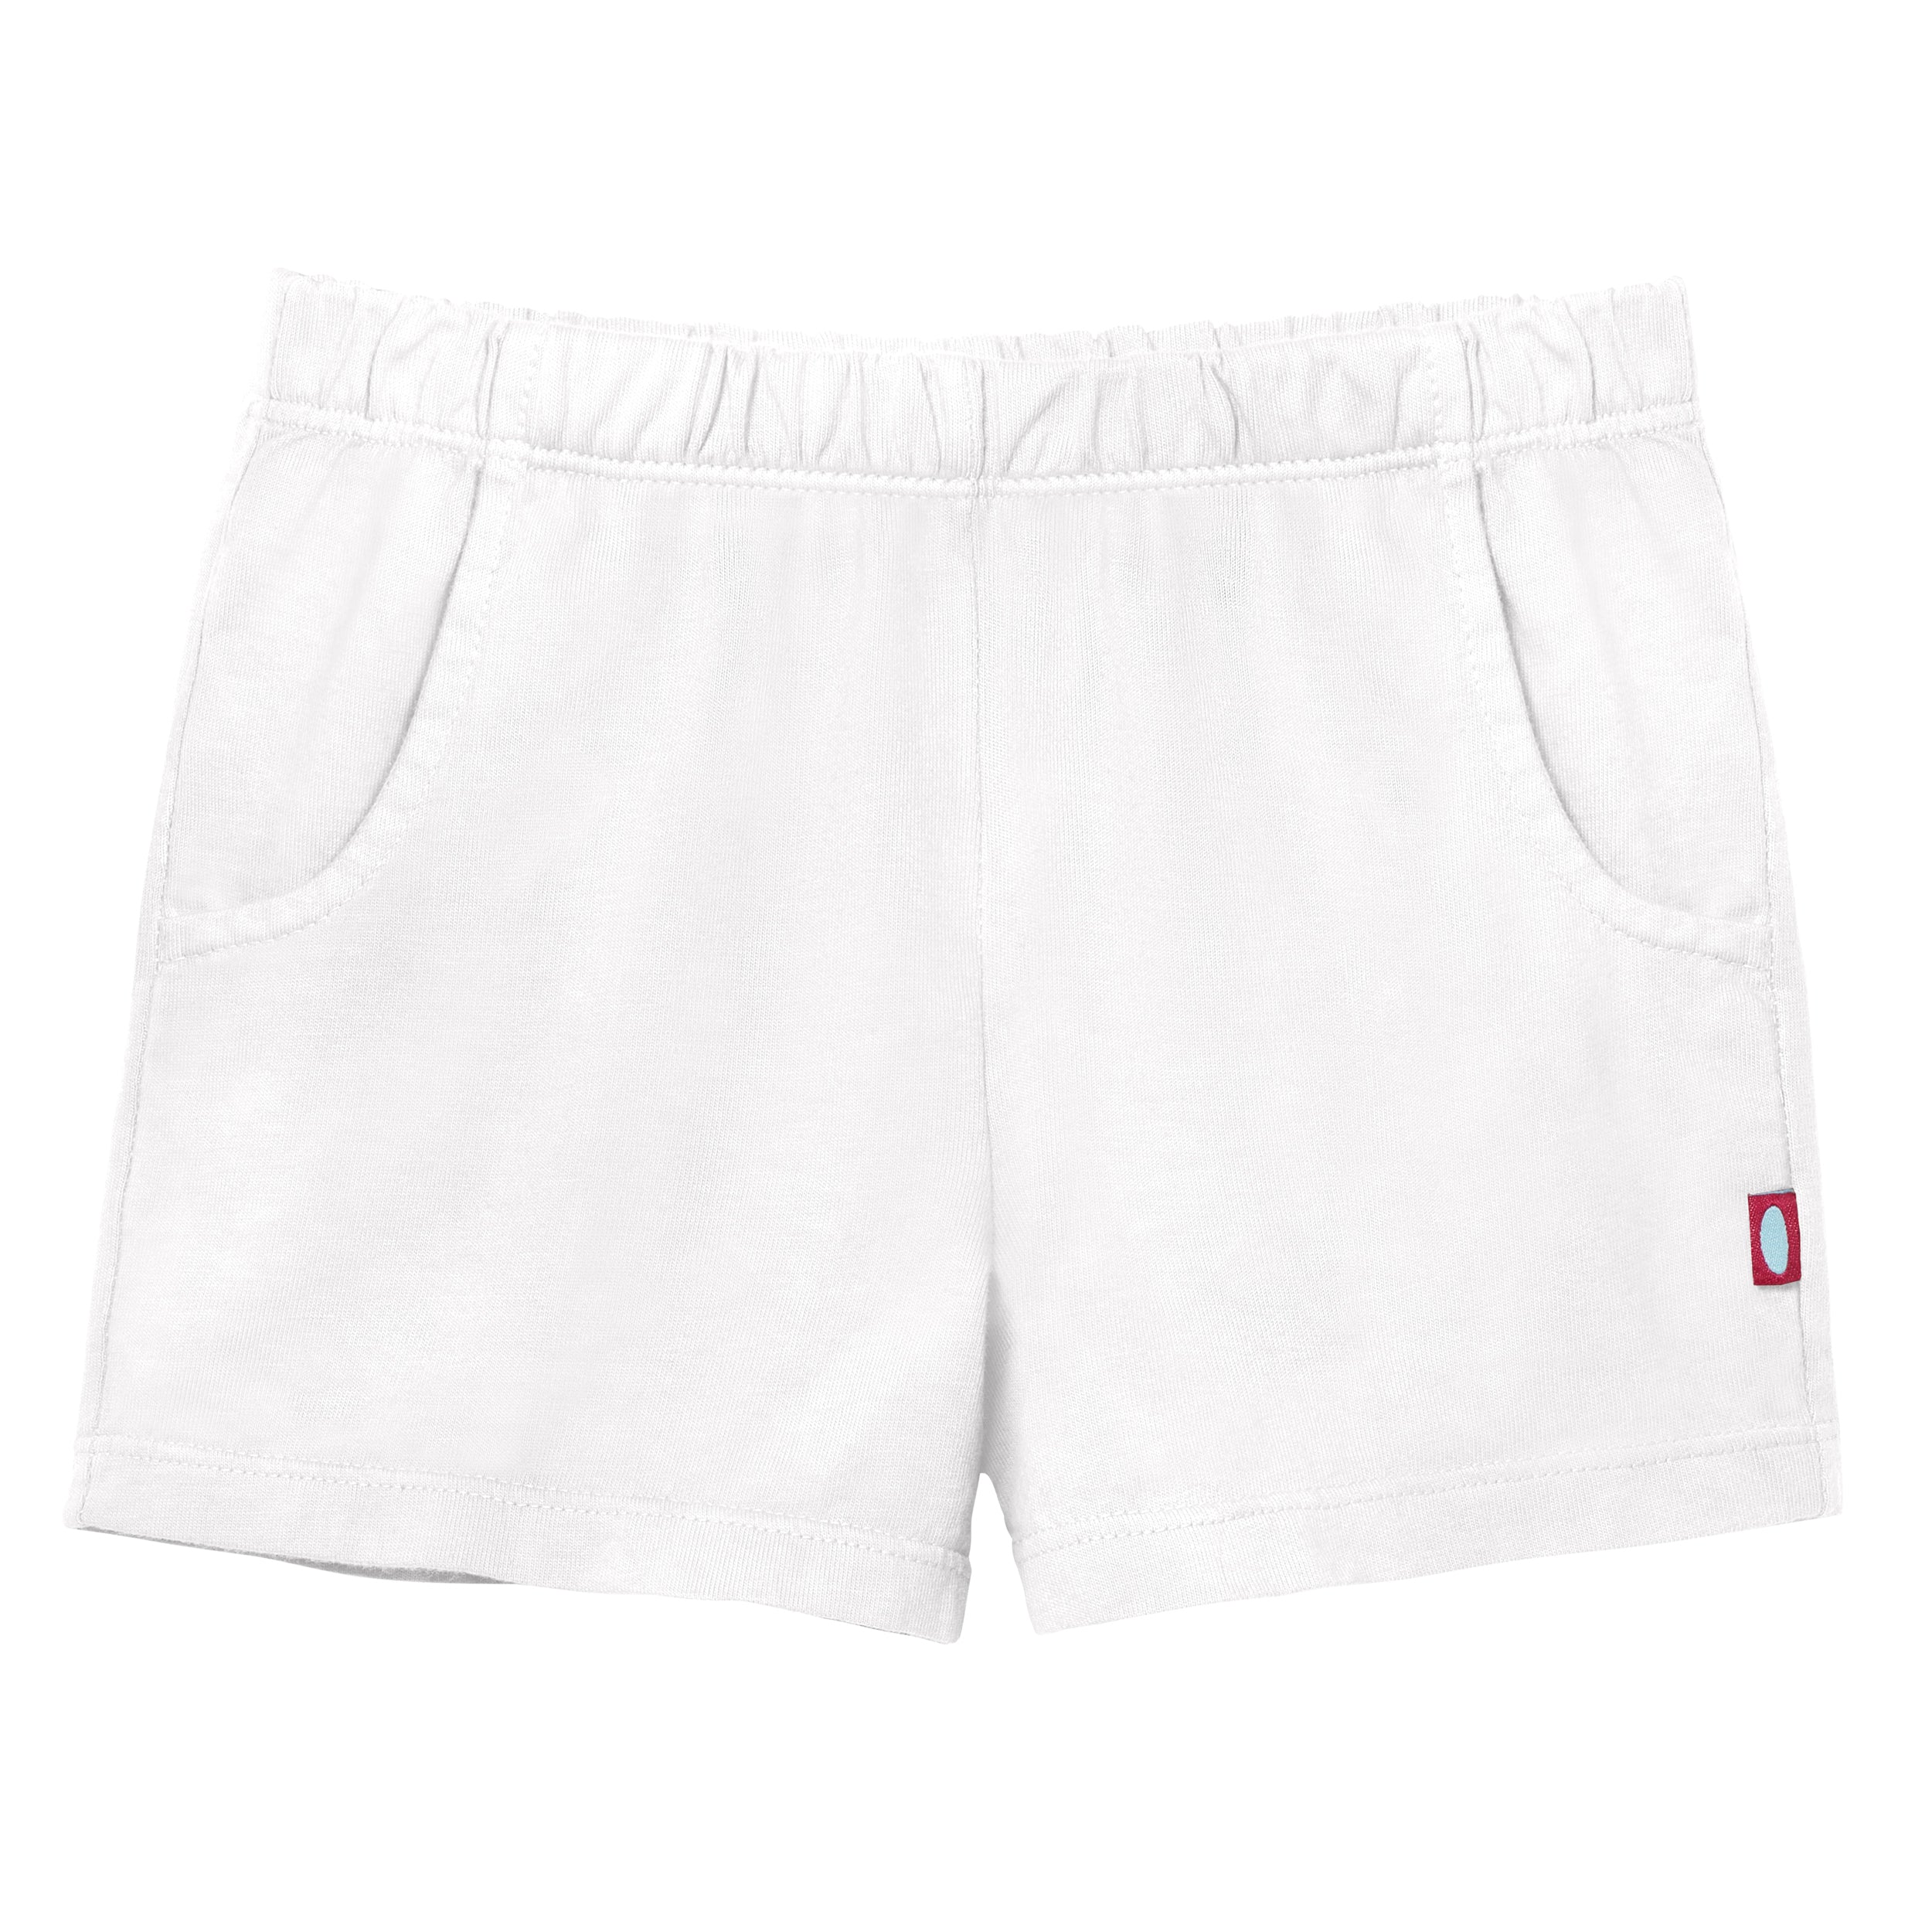 Hanes Originals Women's Cotton Jersey Shorts, 2.5